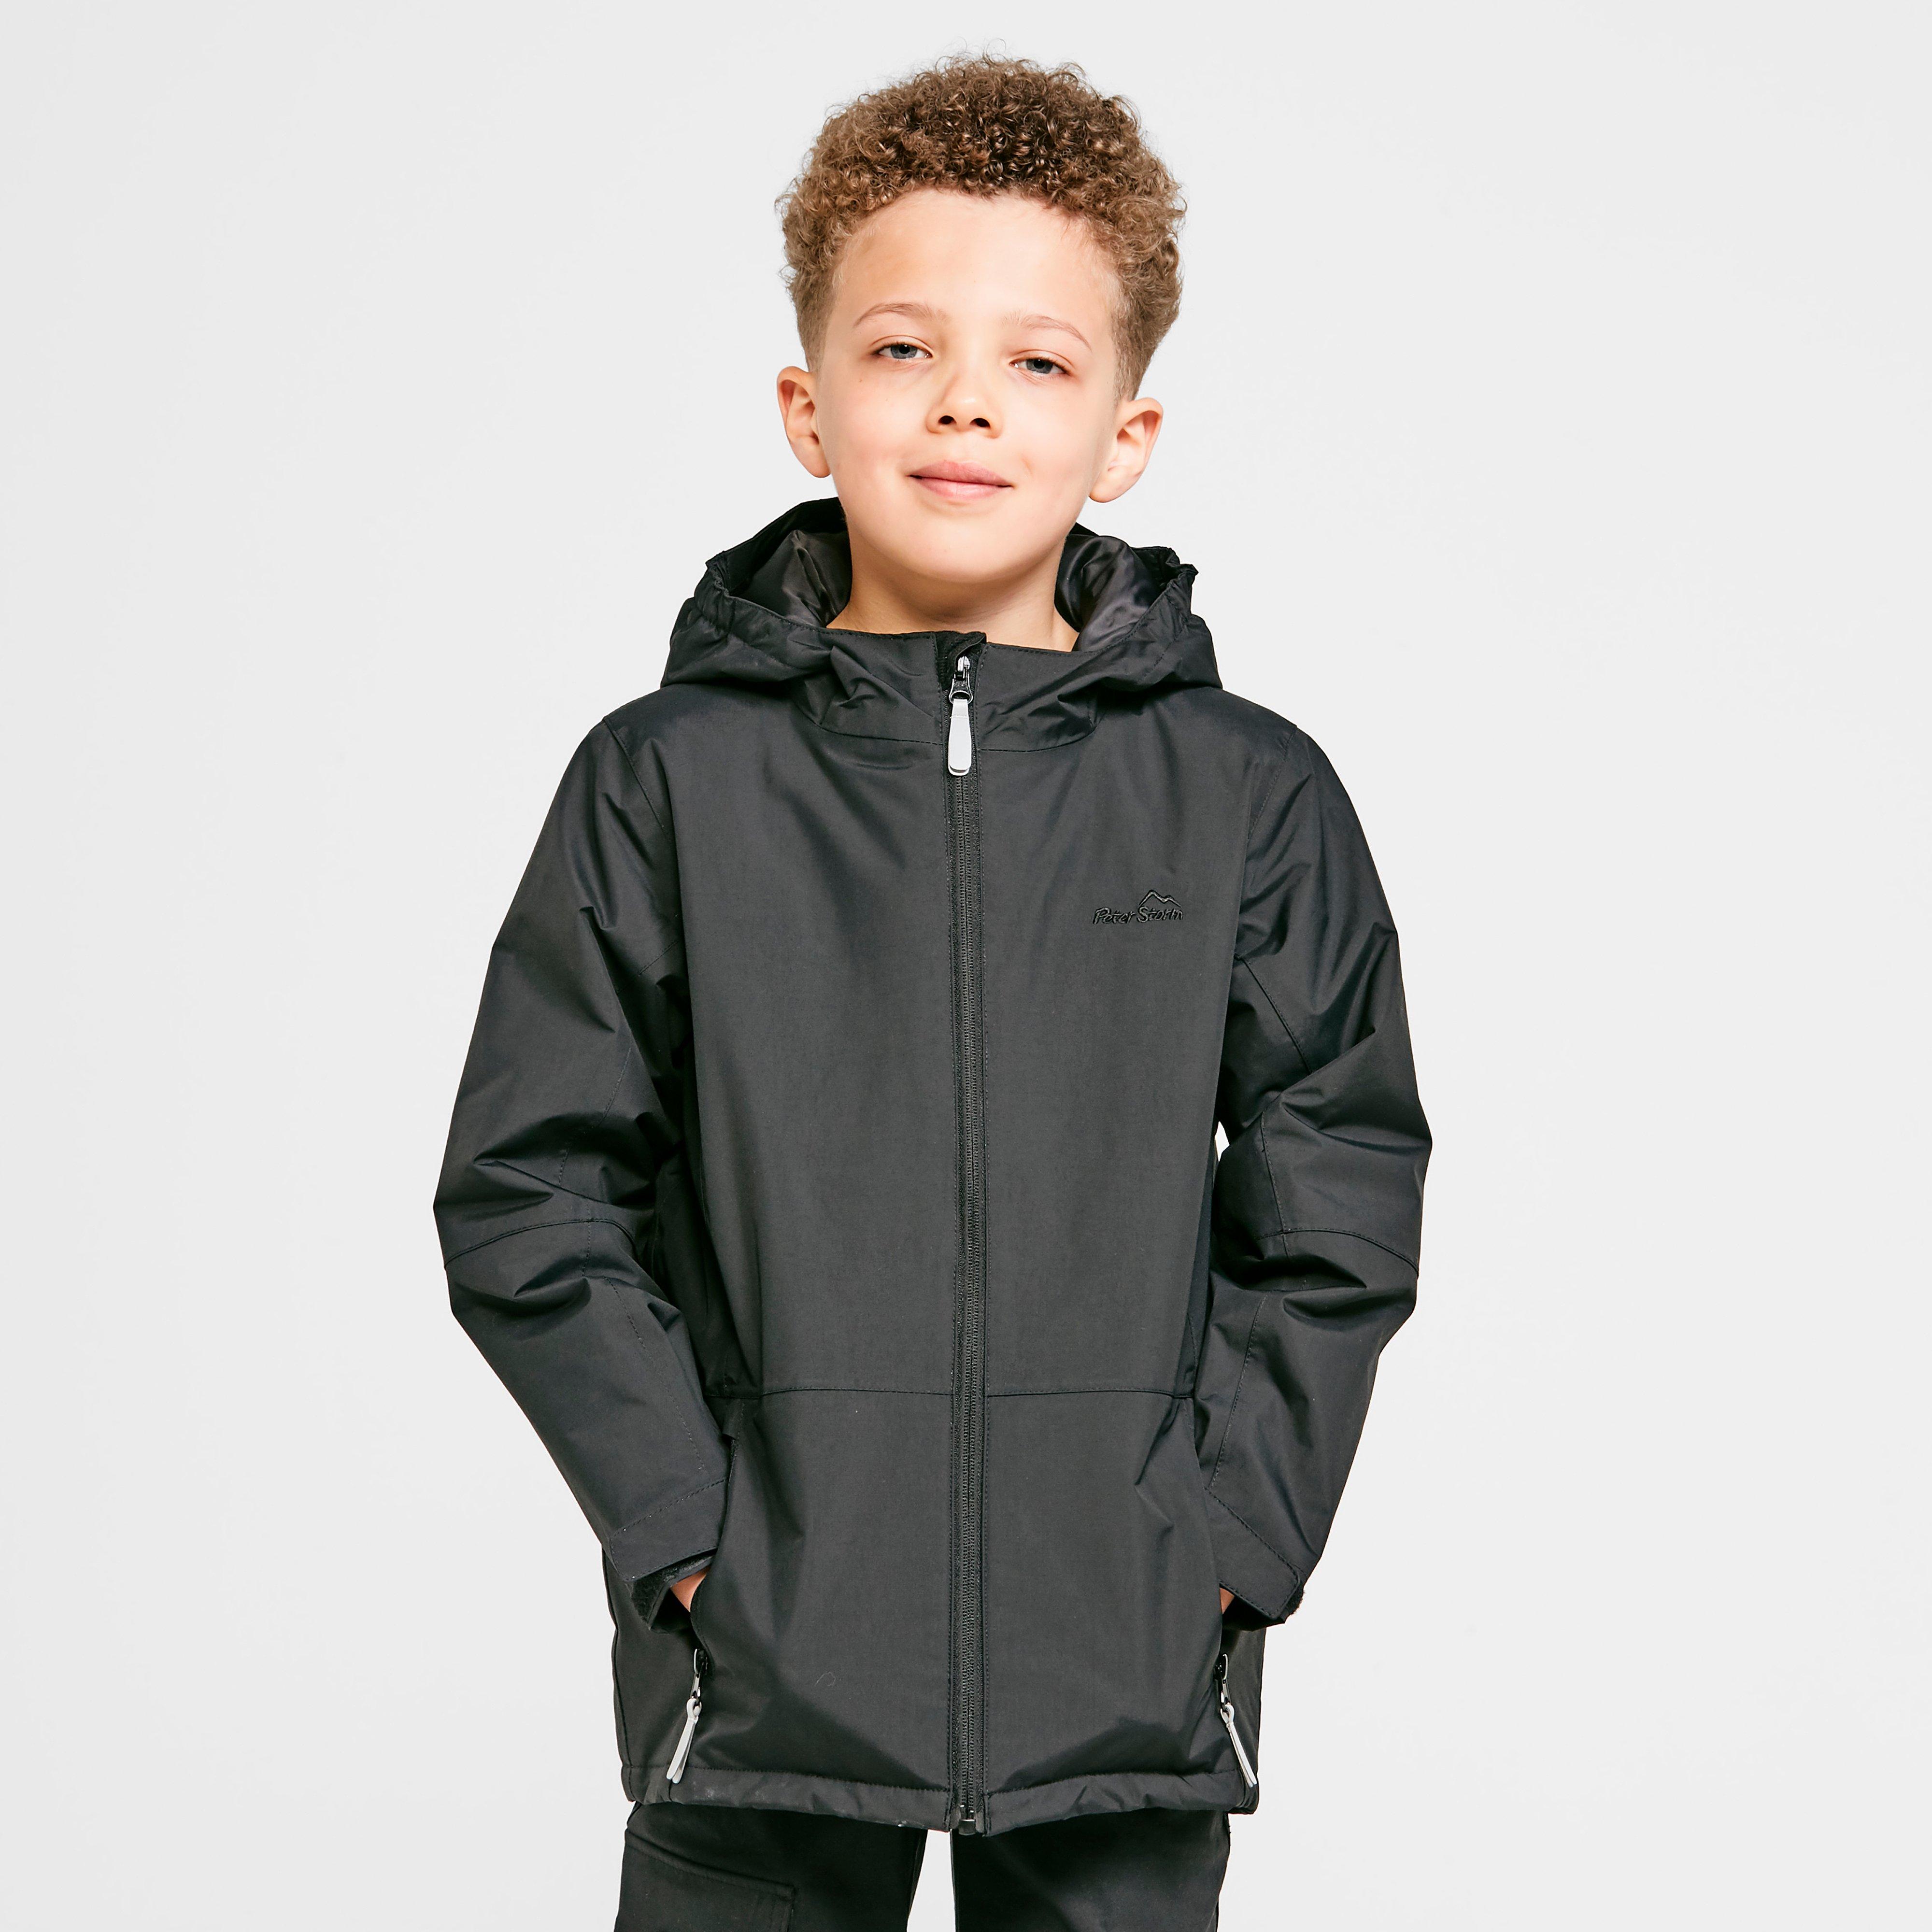 Peter Storm Kids Packable Waterproof Jacket Kids Coat